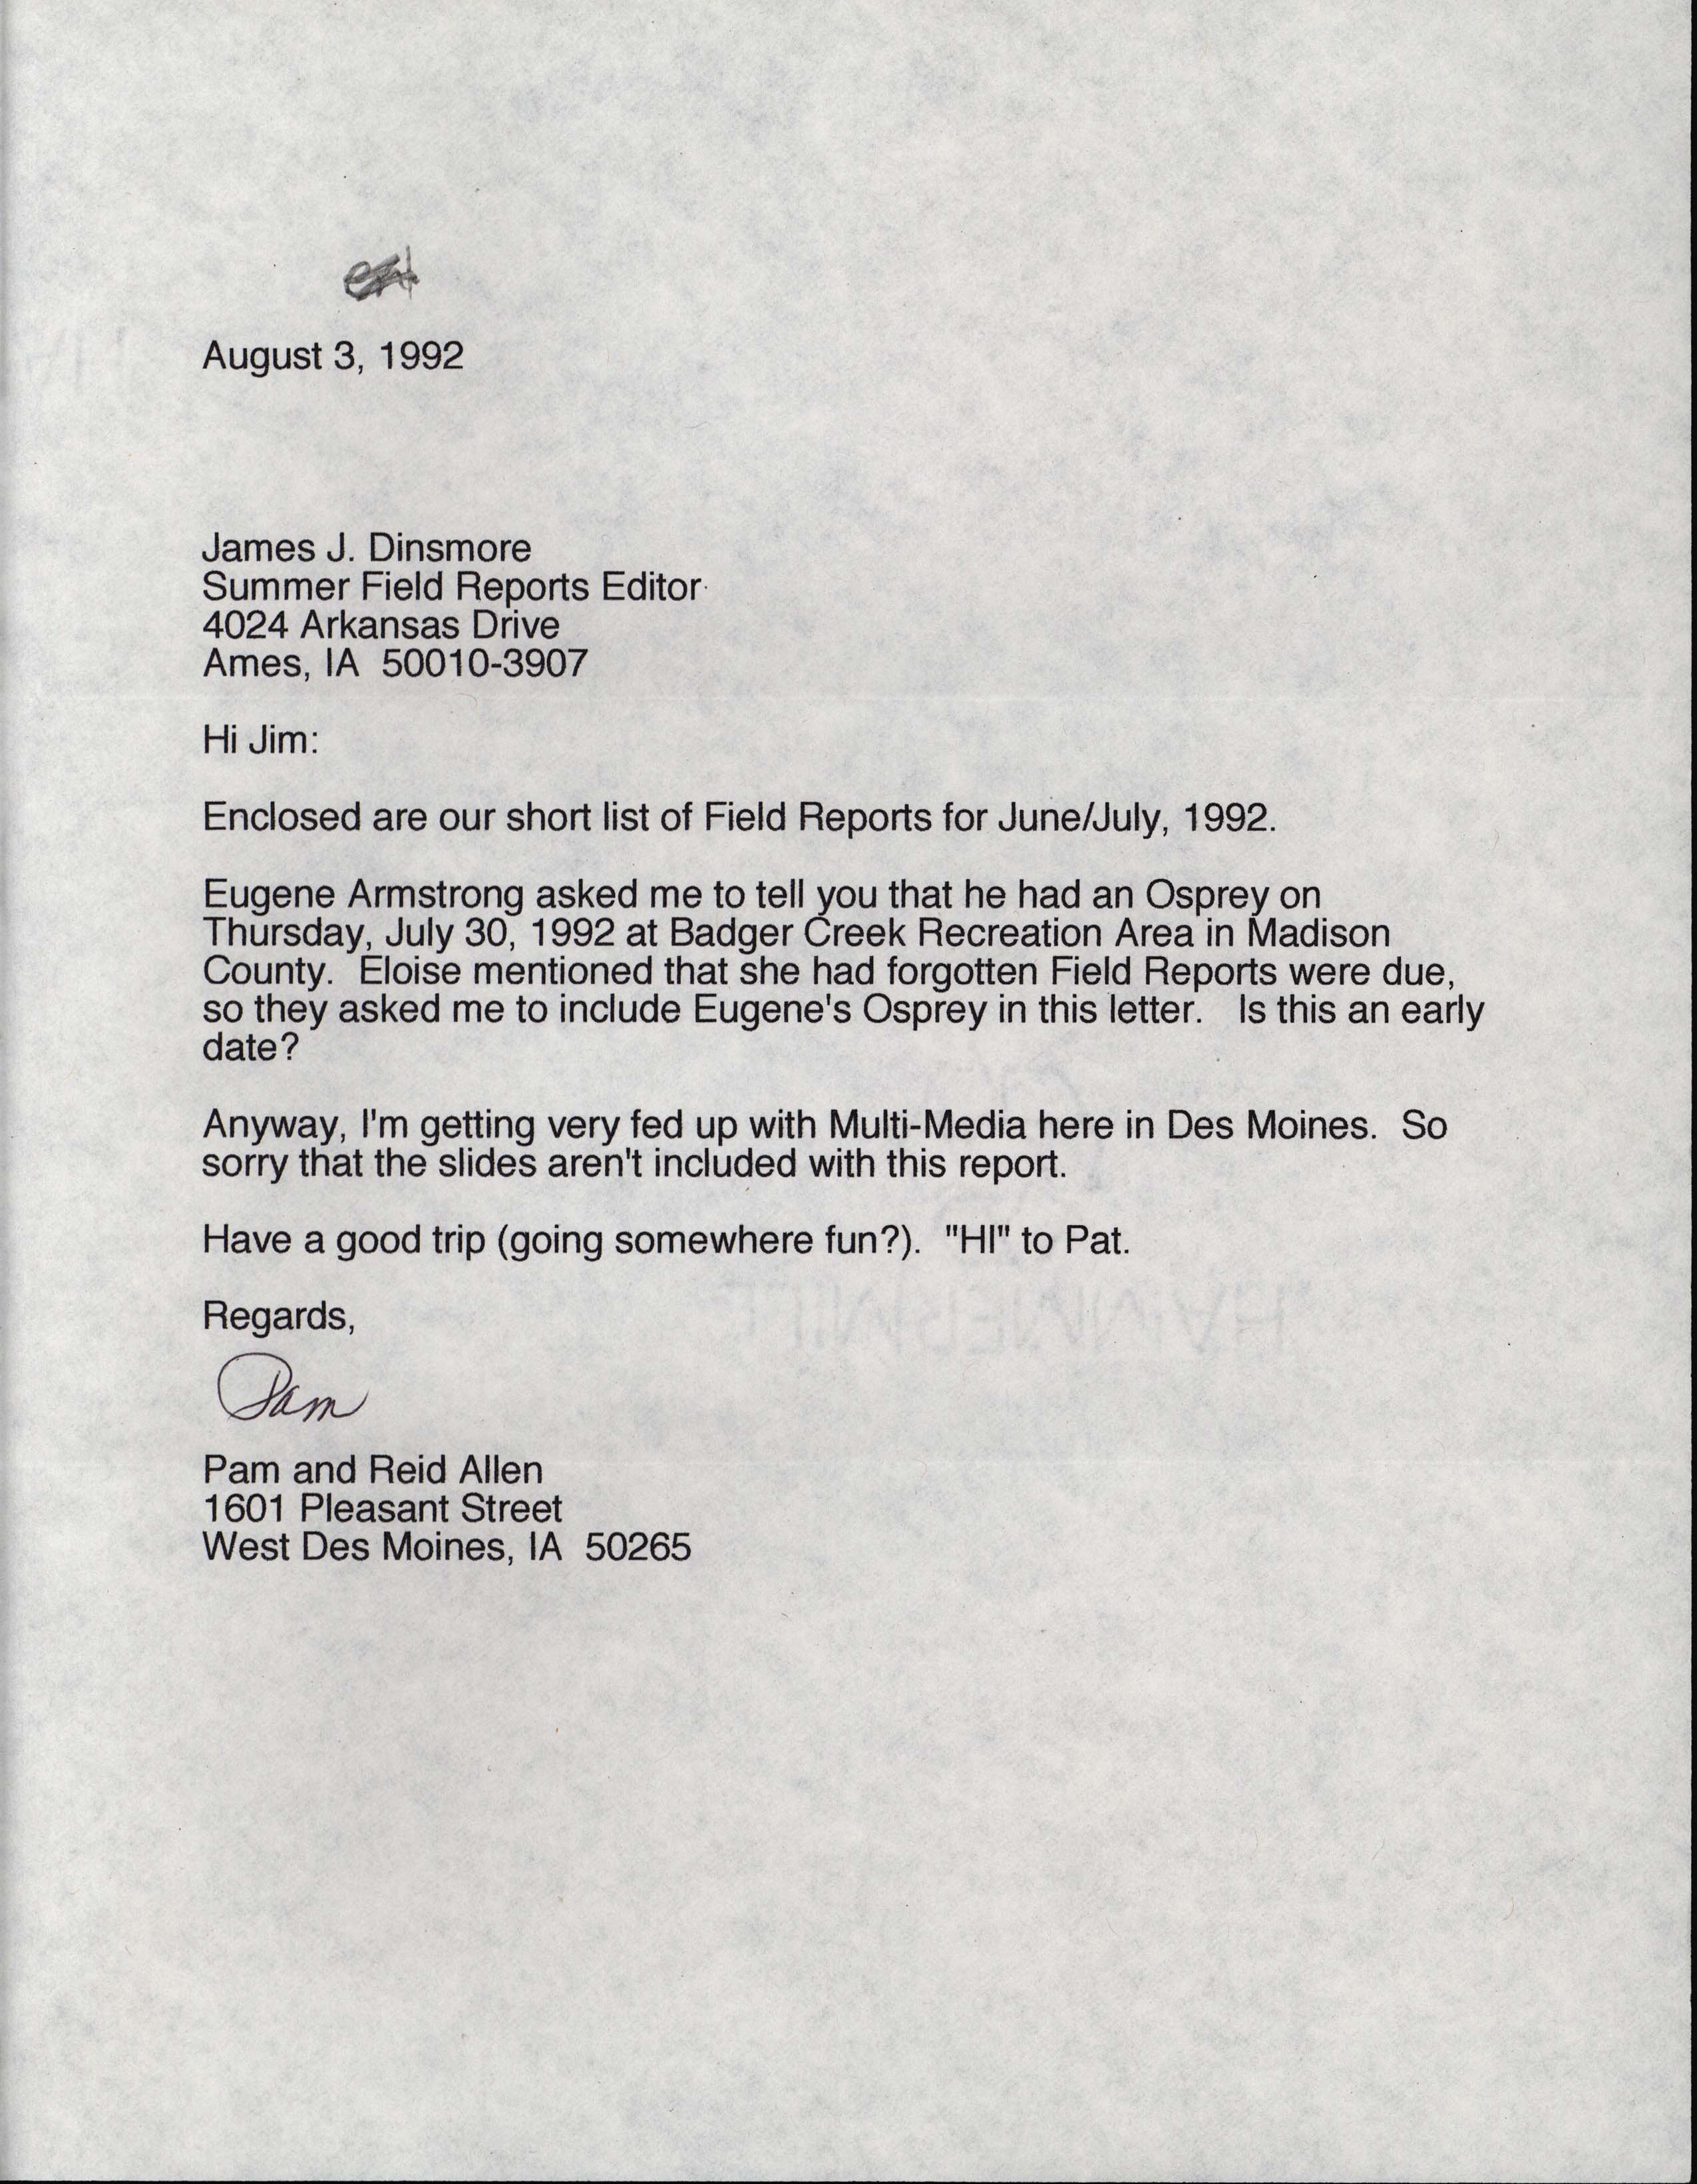 Pam Allen and Reid I. Allen letter to James J. Dinsmore regarding summer bird sightings, August 3, 1992